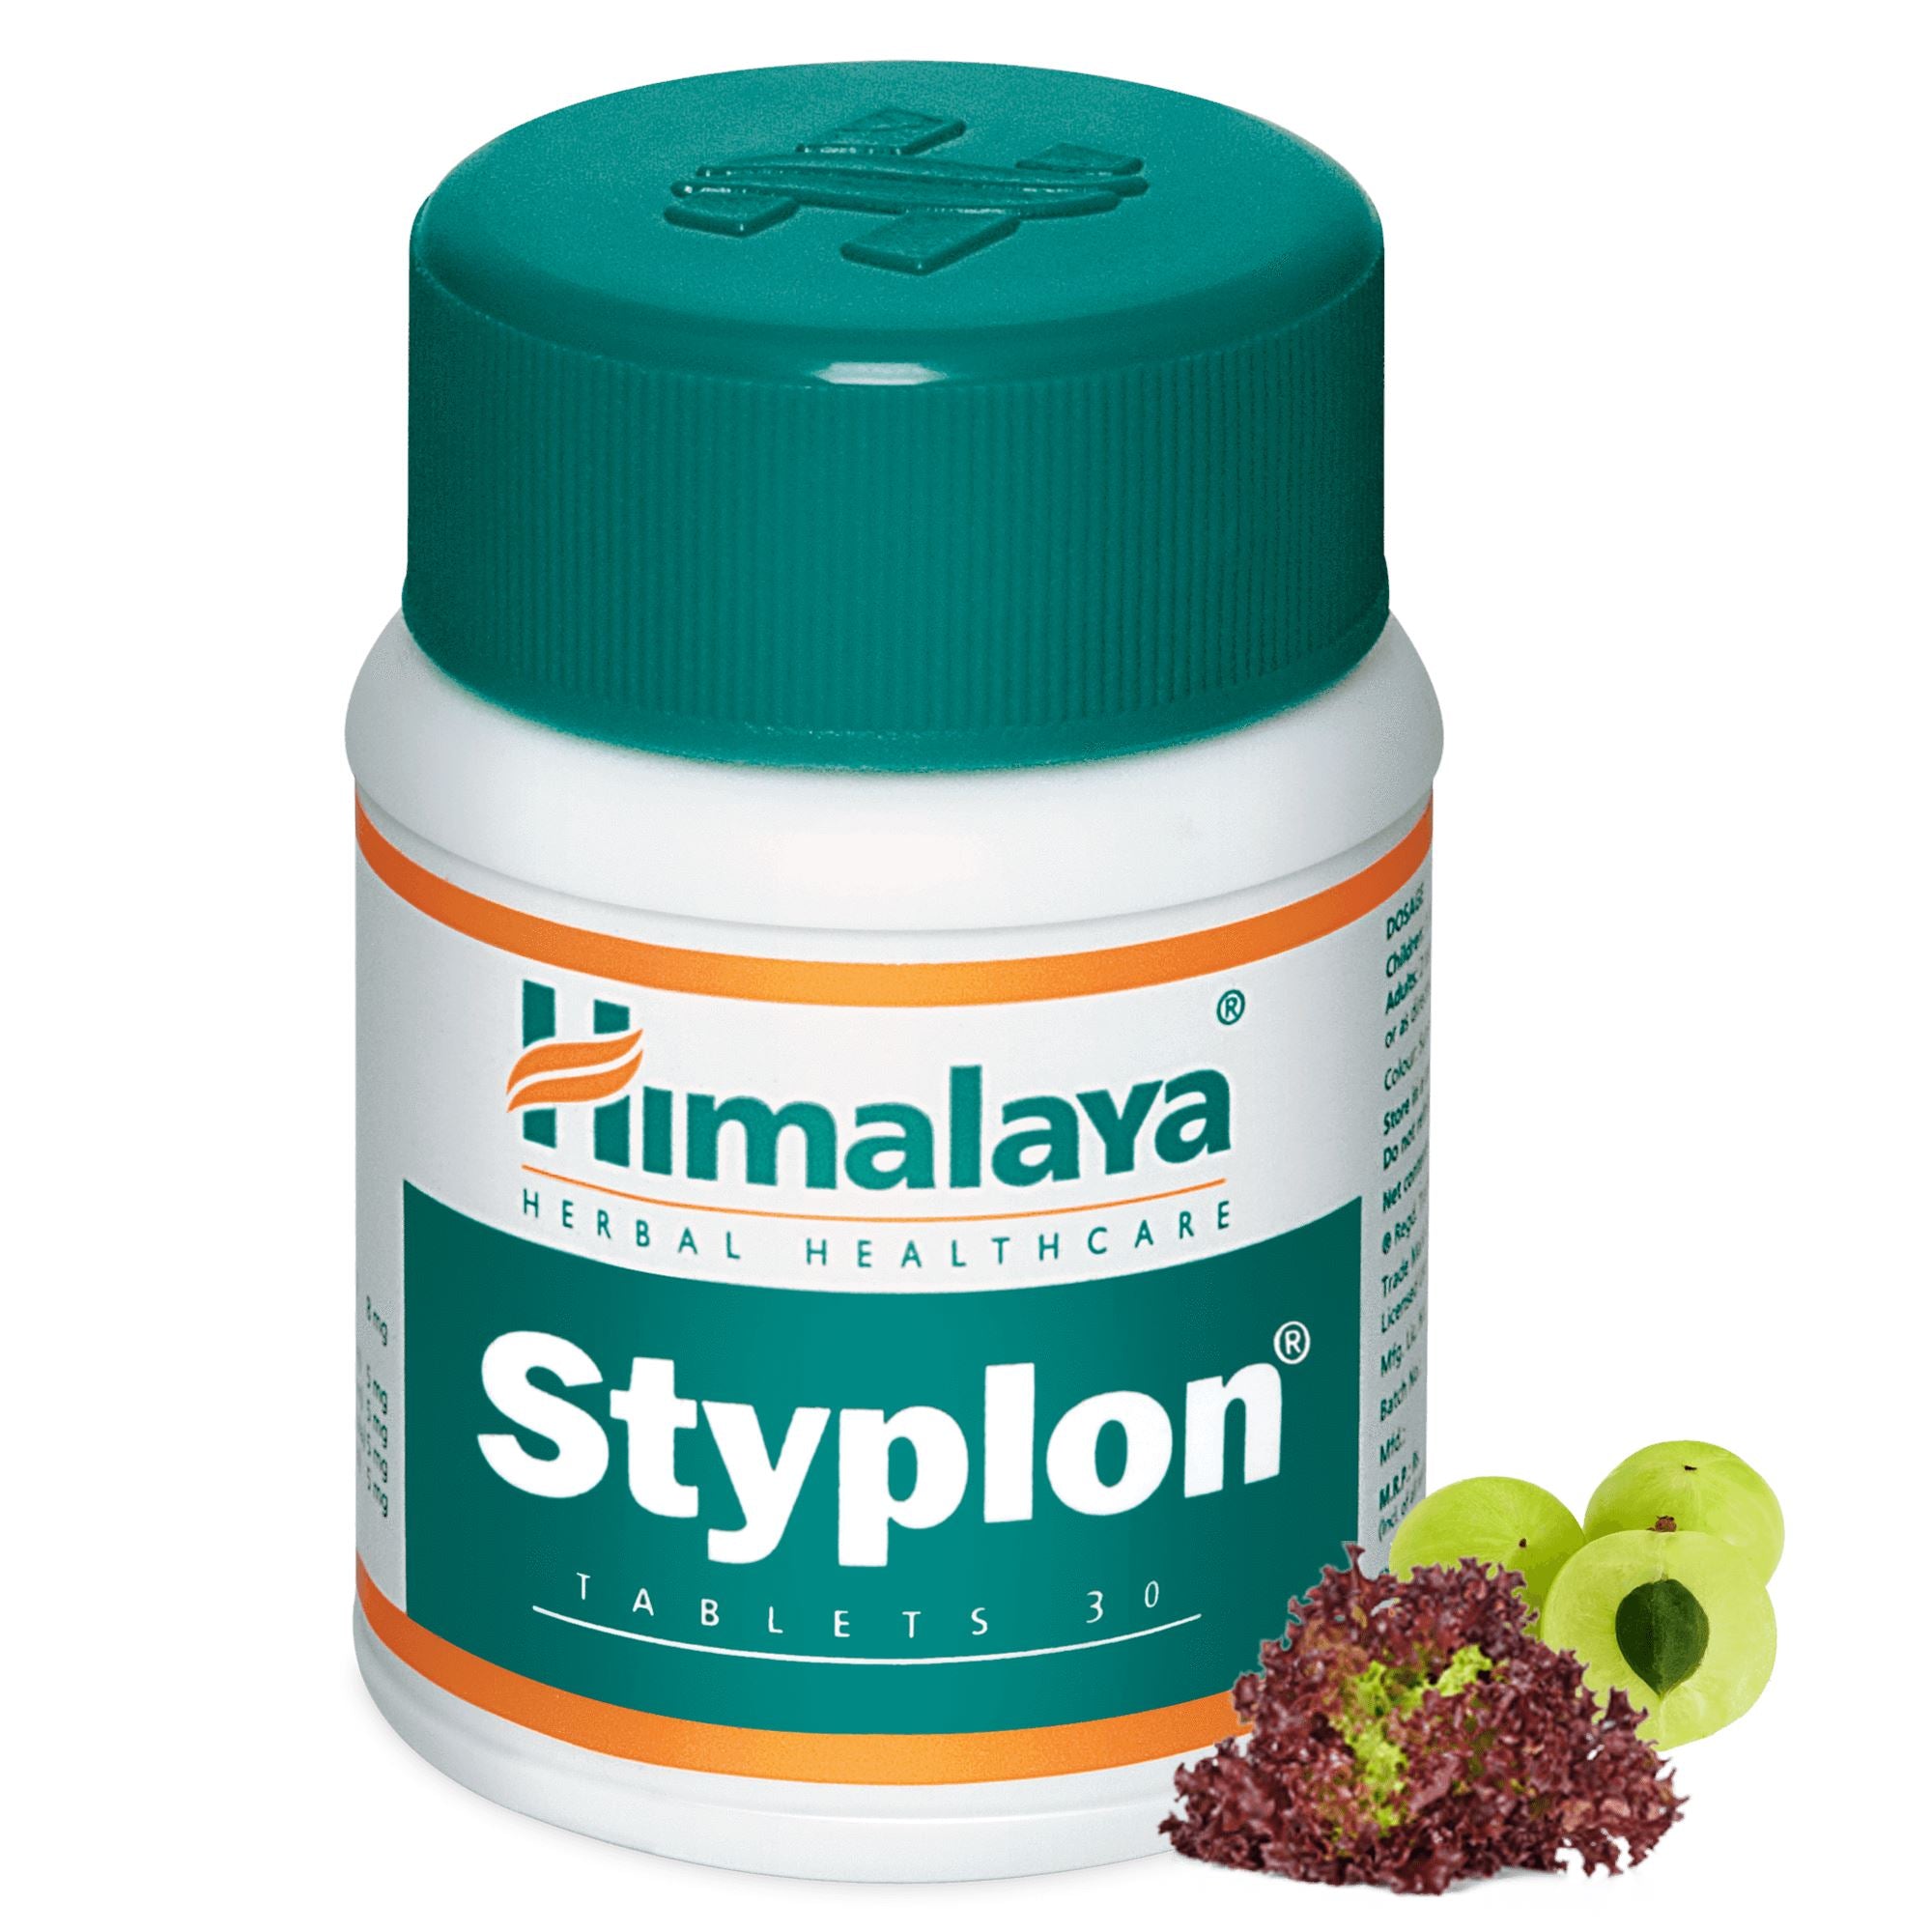 Himalaya Styplon - Helps in treating bleeding gums, bleeding hemorrhoids, epistaxis, and hematuria